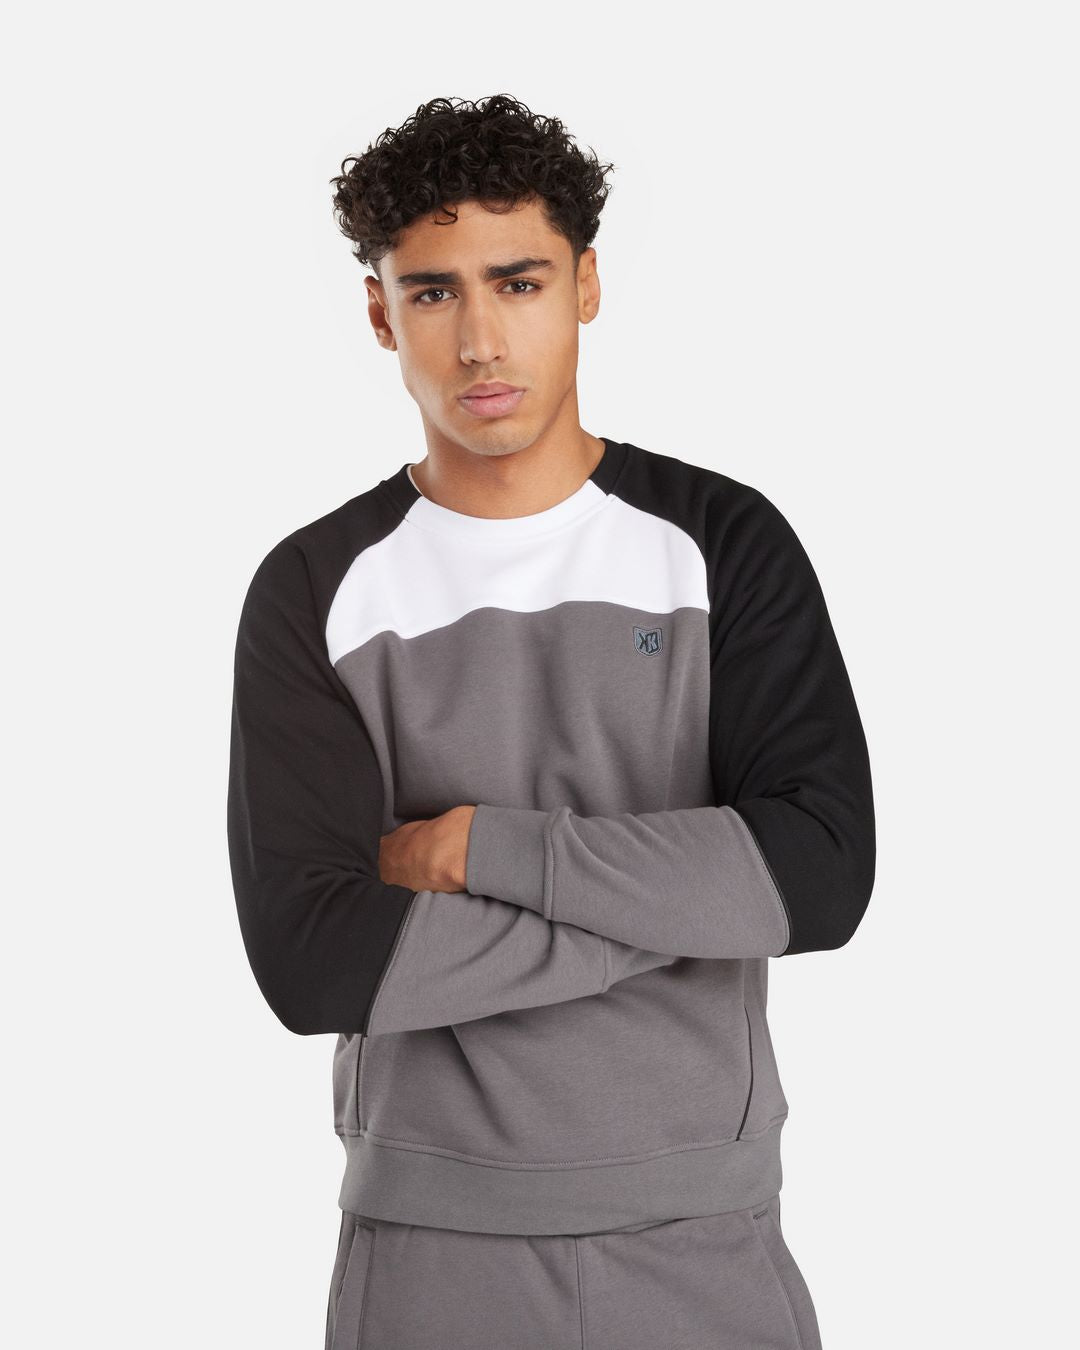 FK Sicarios VI Sweatshirt - Grey/Black/White